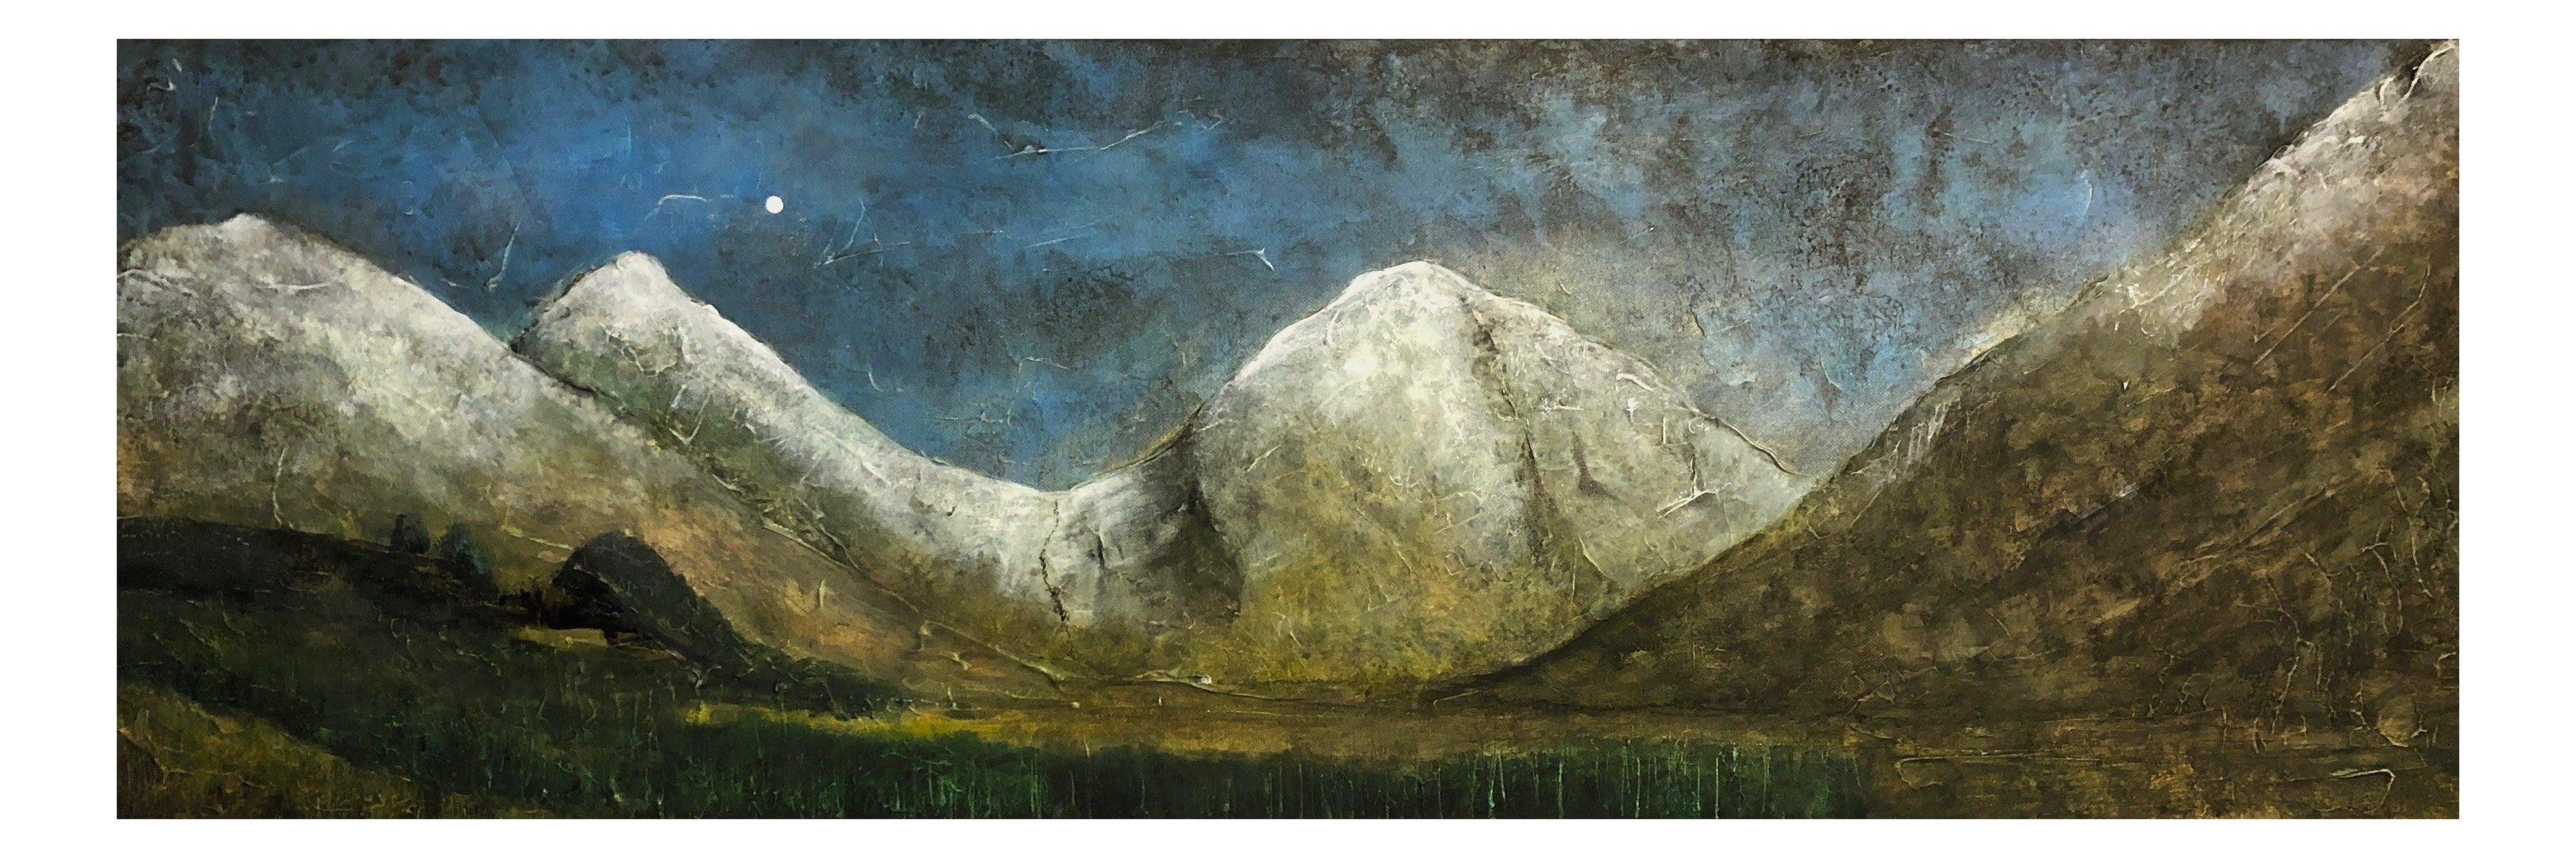 Glencoe Moonlit Snow Scotland Panoramic Fine Art Prints